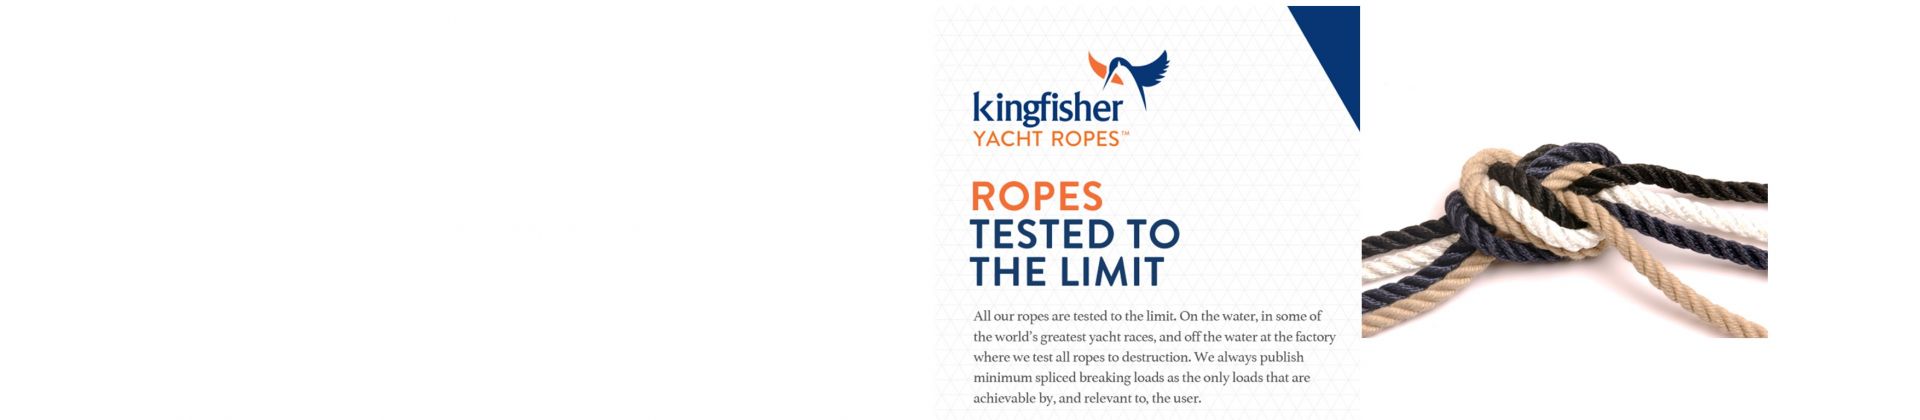 Kingfisher Ropes